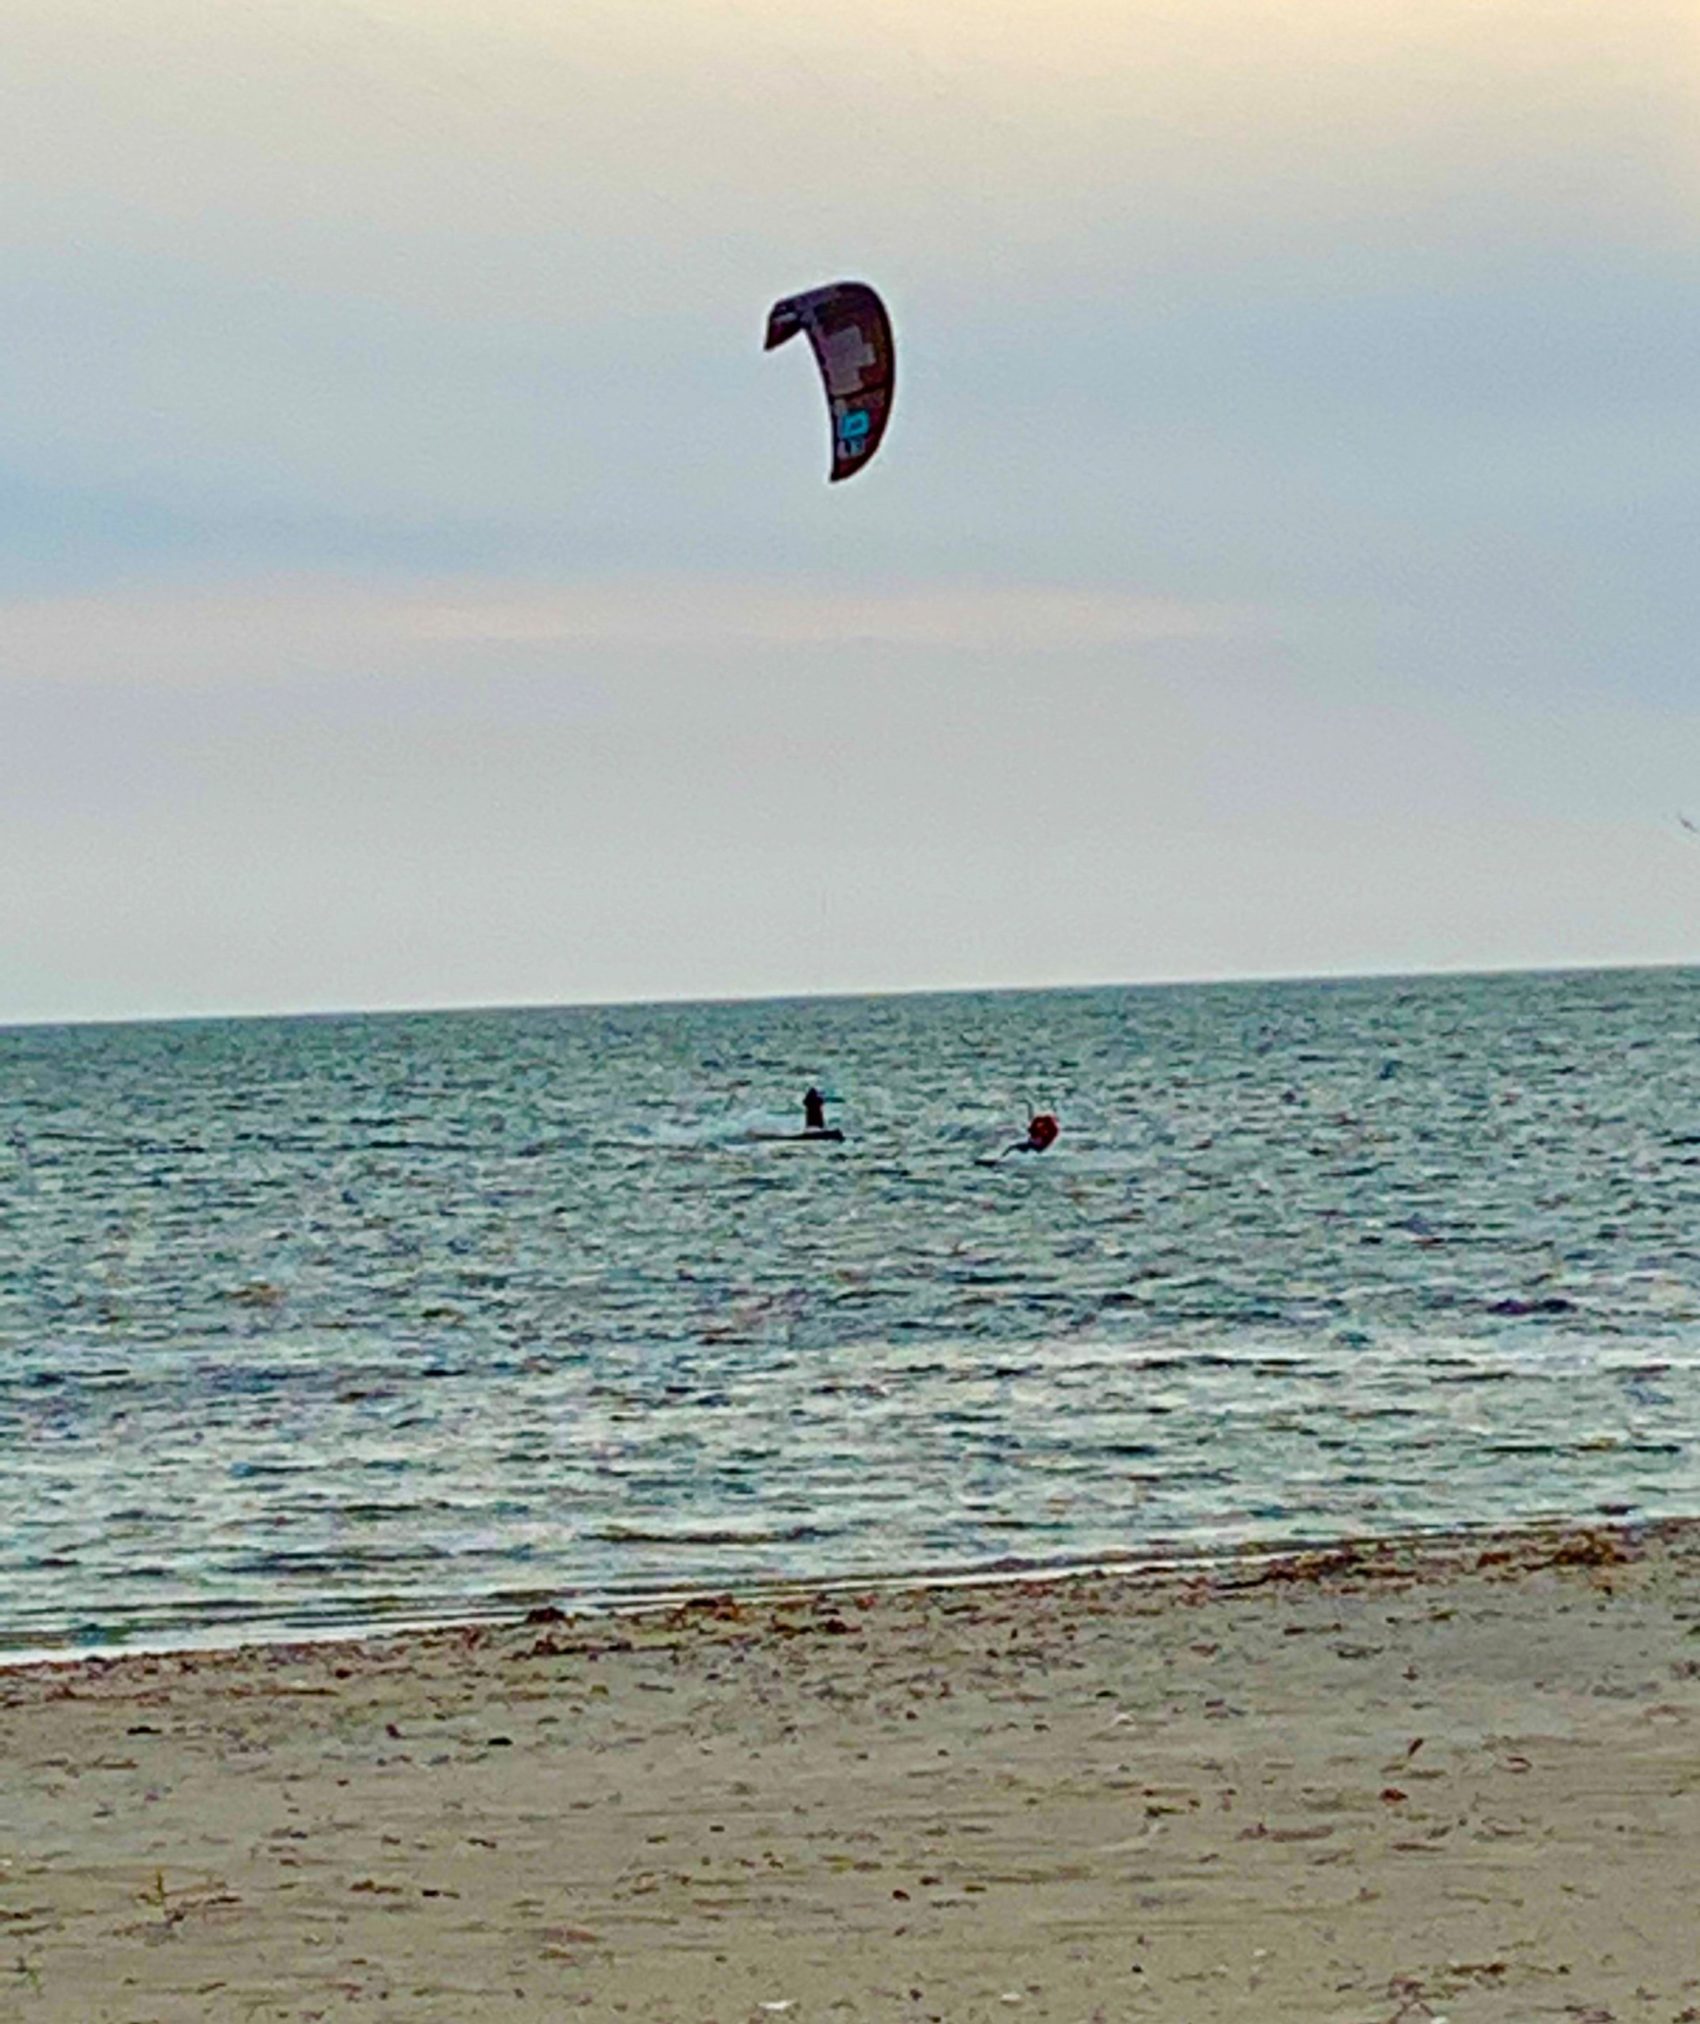 A person paragliding over the ocean